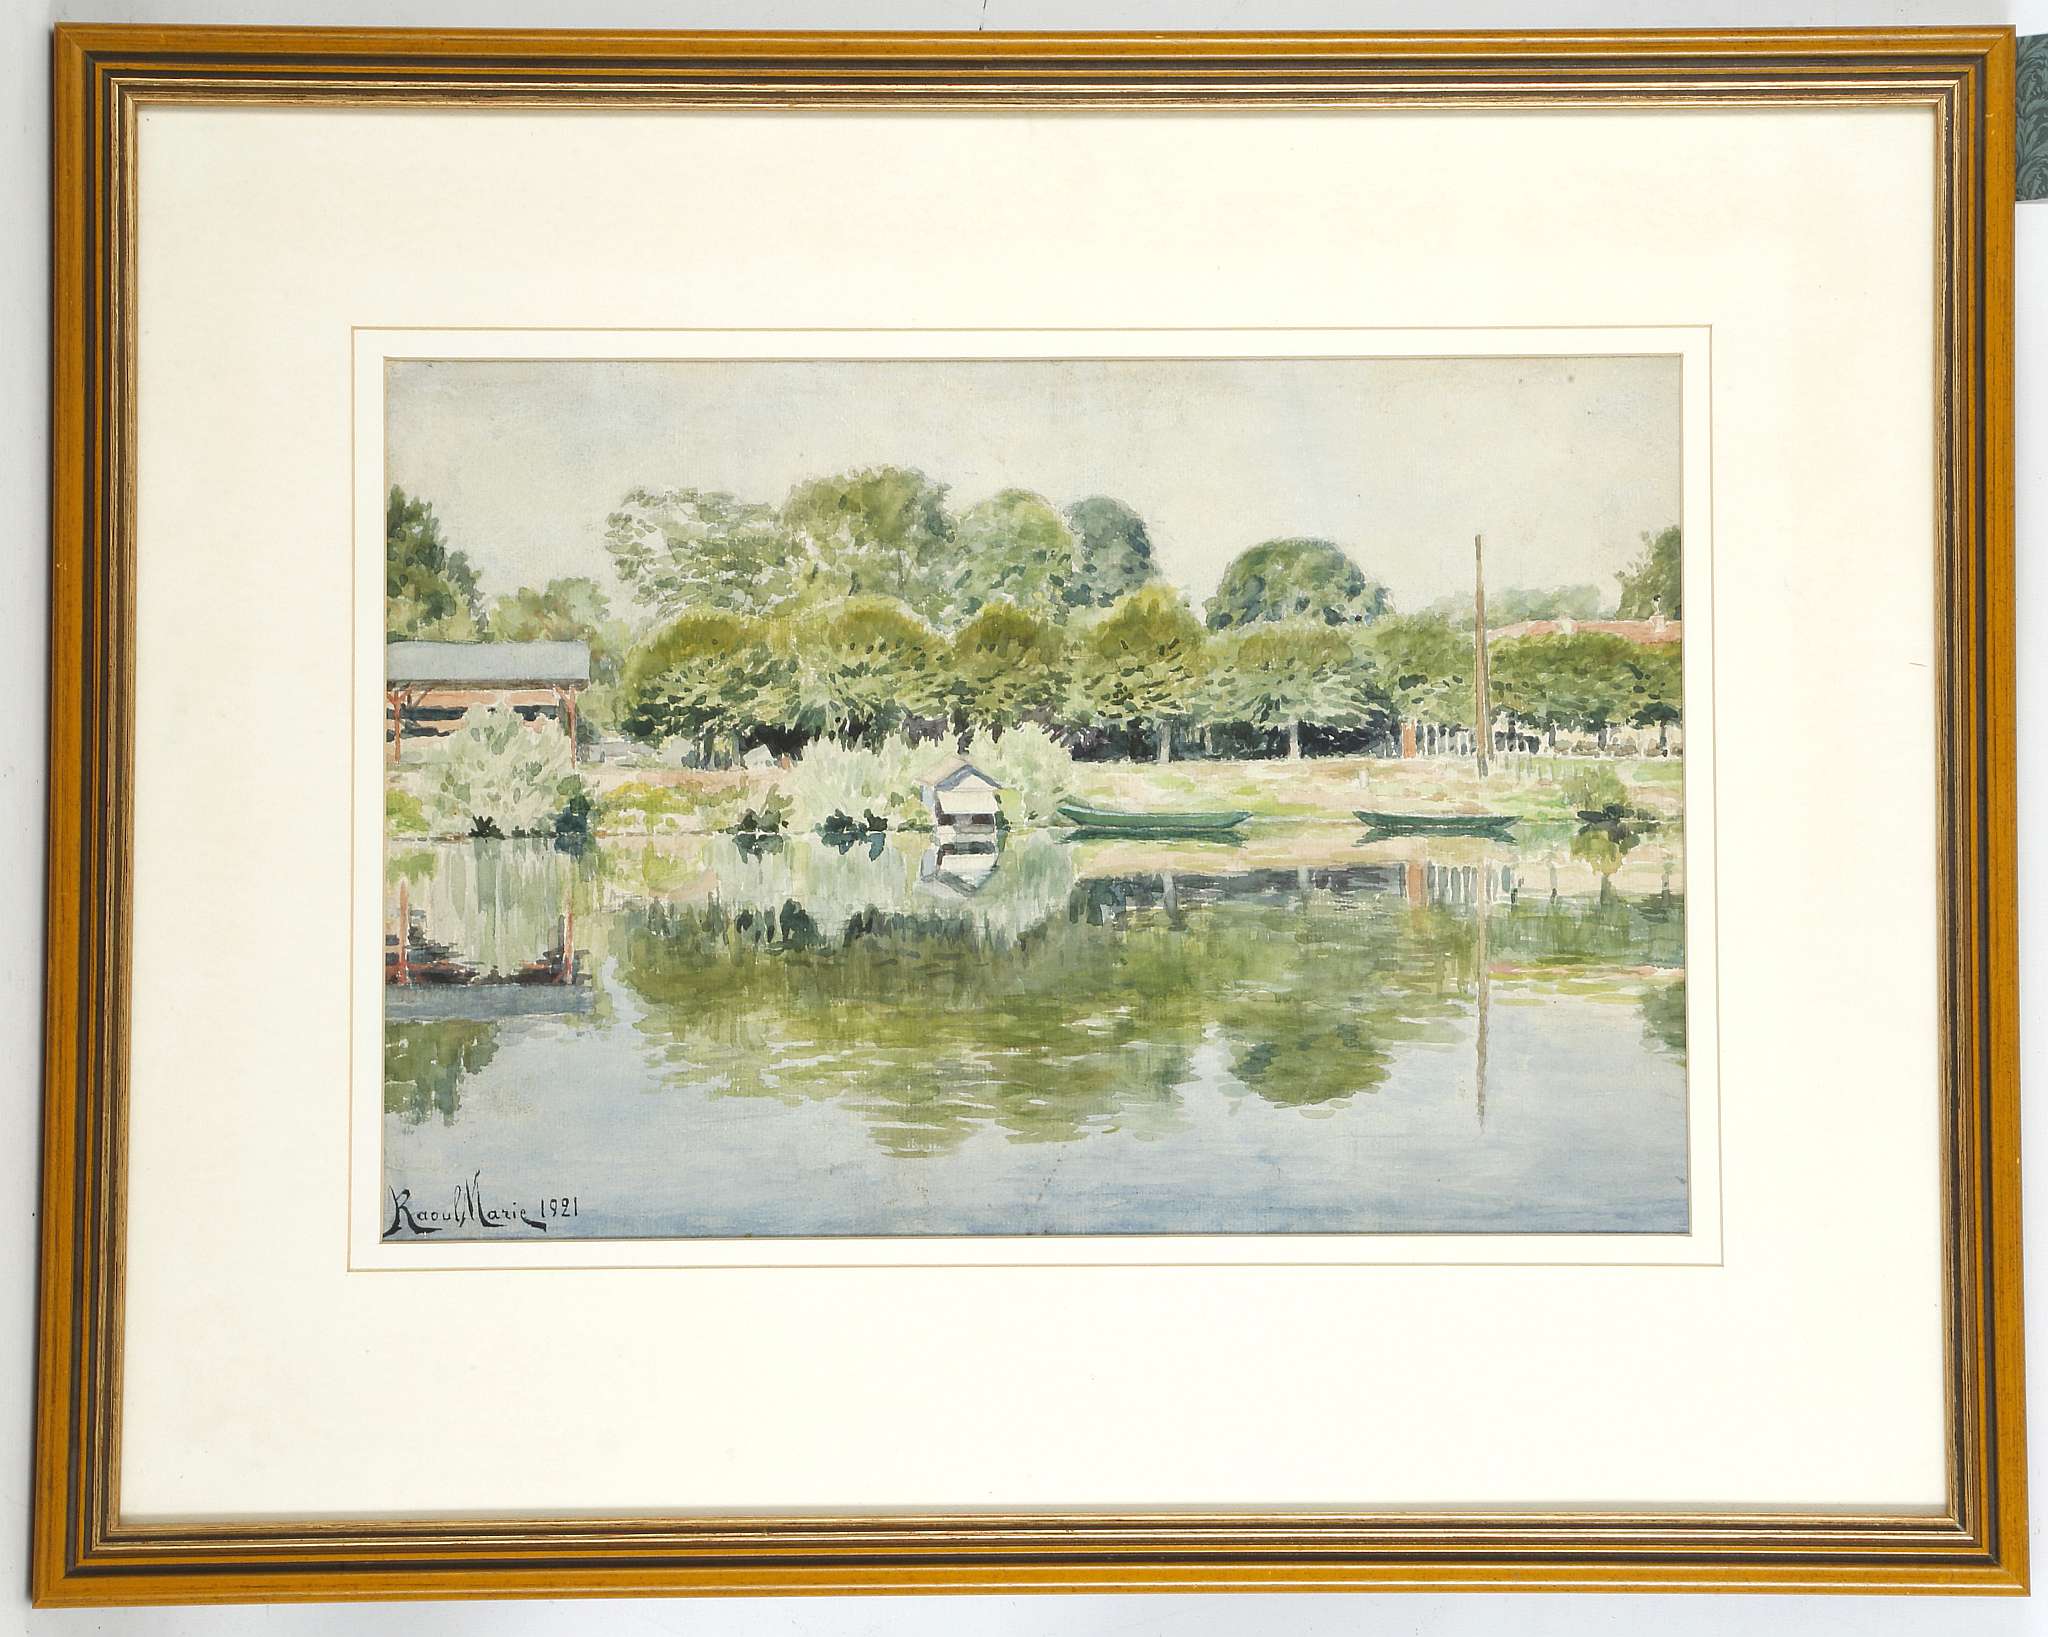 Raoul Marie b.1850 French. 'Au bord de la riviere'. Watercolour riverscape. Signed lower left and